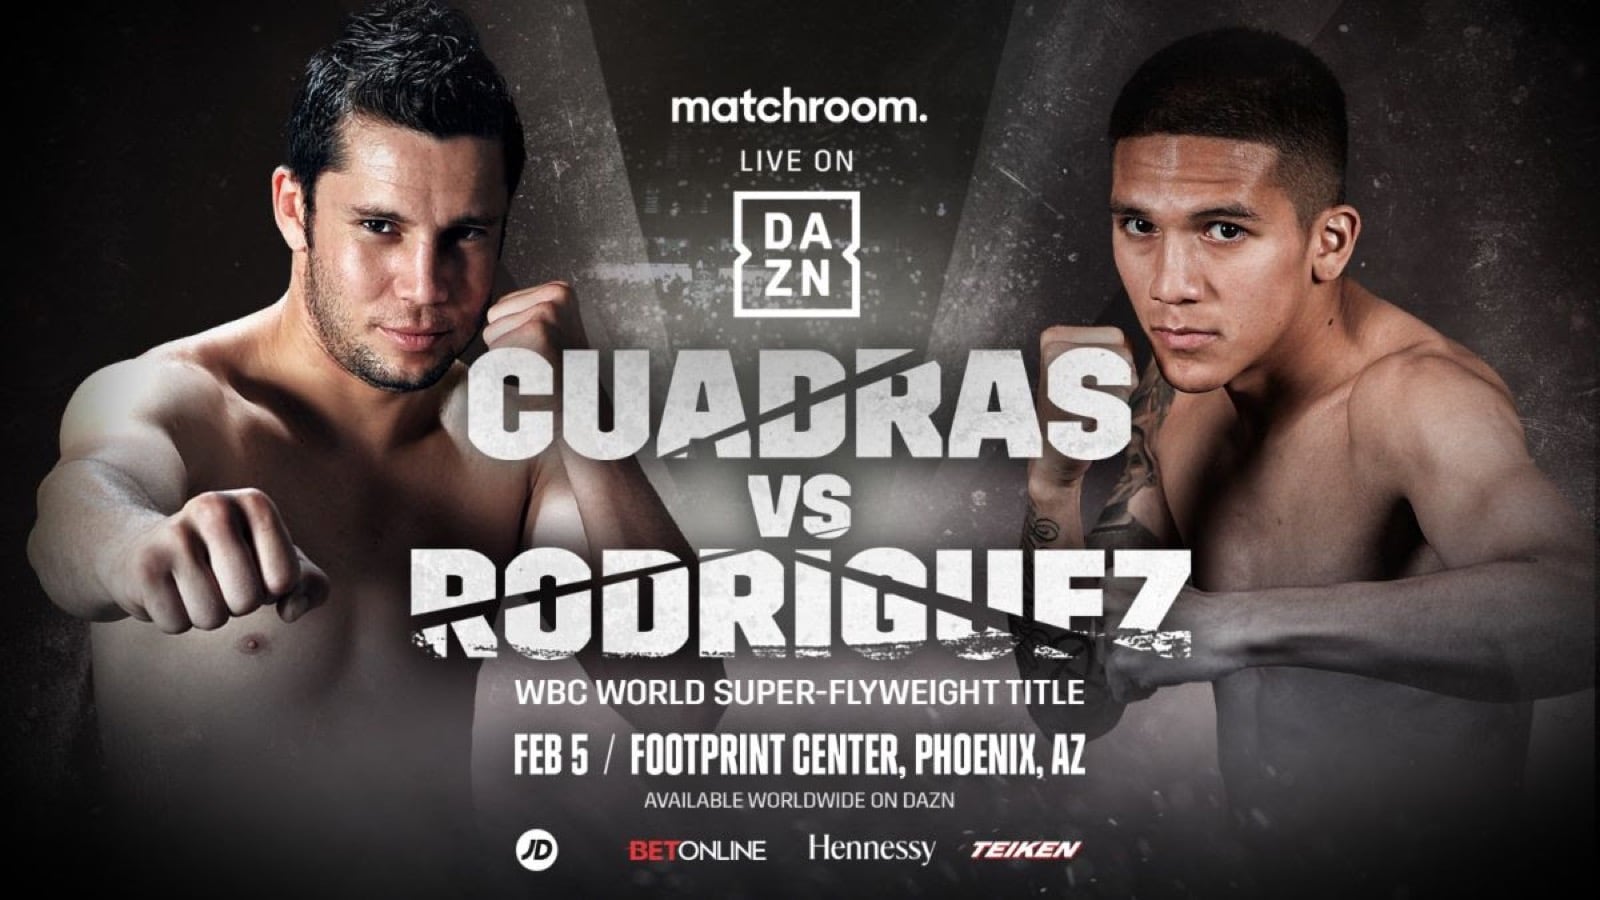 Image: Jesse Rodriguez vs. Carlos Cuadras on Feb.5th in Phoenix, Arizona on DAZN